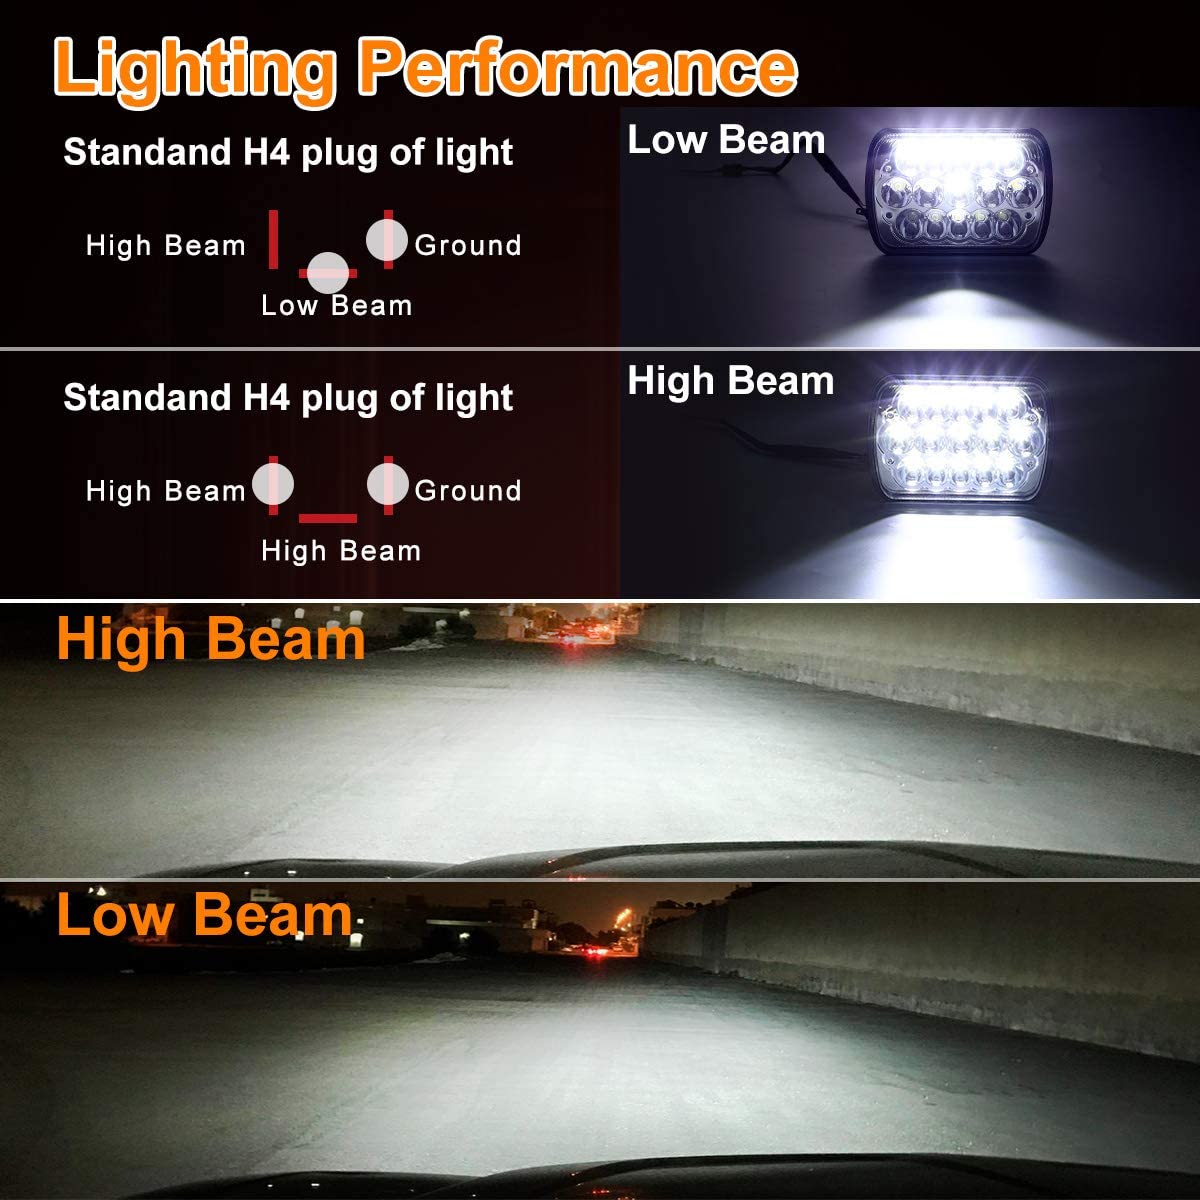 H5054 KASLIGHT 5x7 LED Headlights, 7x6 High/Low Beam Sealed Headlights, H4 9003, 6054 H5054 Socket, for Jeep Wrangler YJ XJ S10 Pickup Chevy Blazer Express Van/Cherokee Truck Ford E250